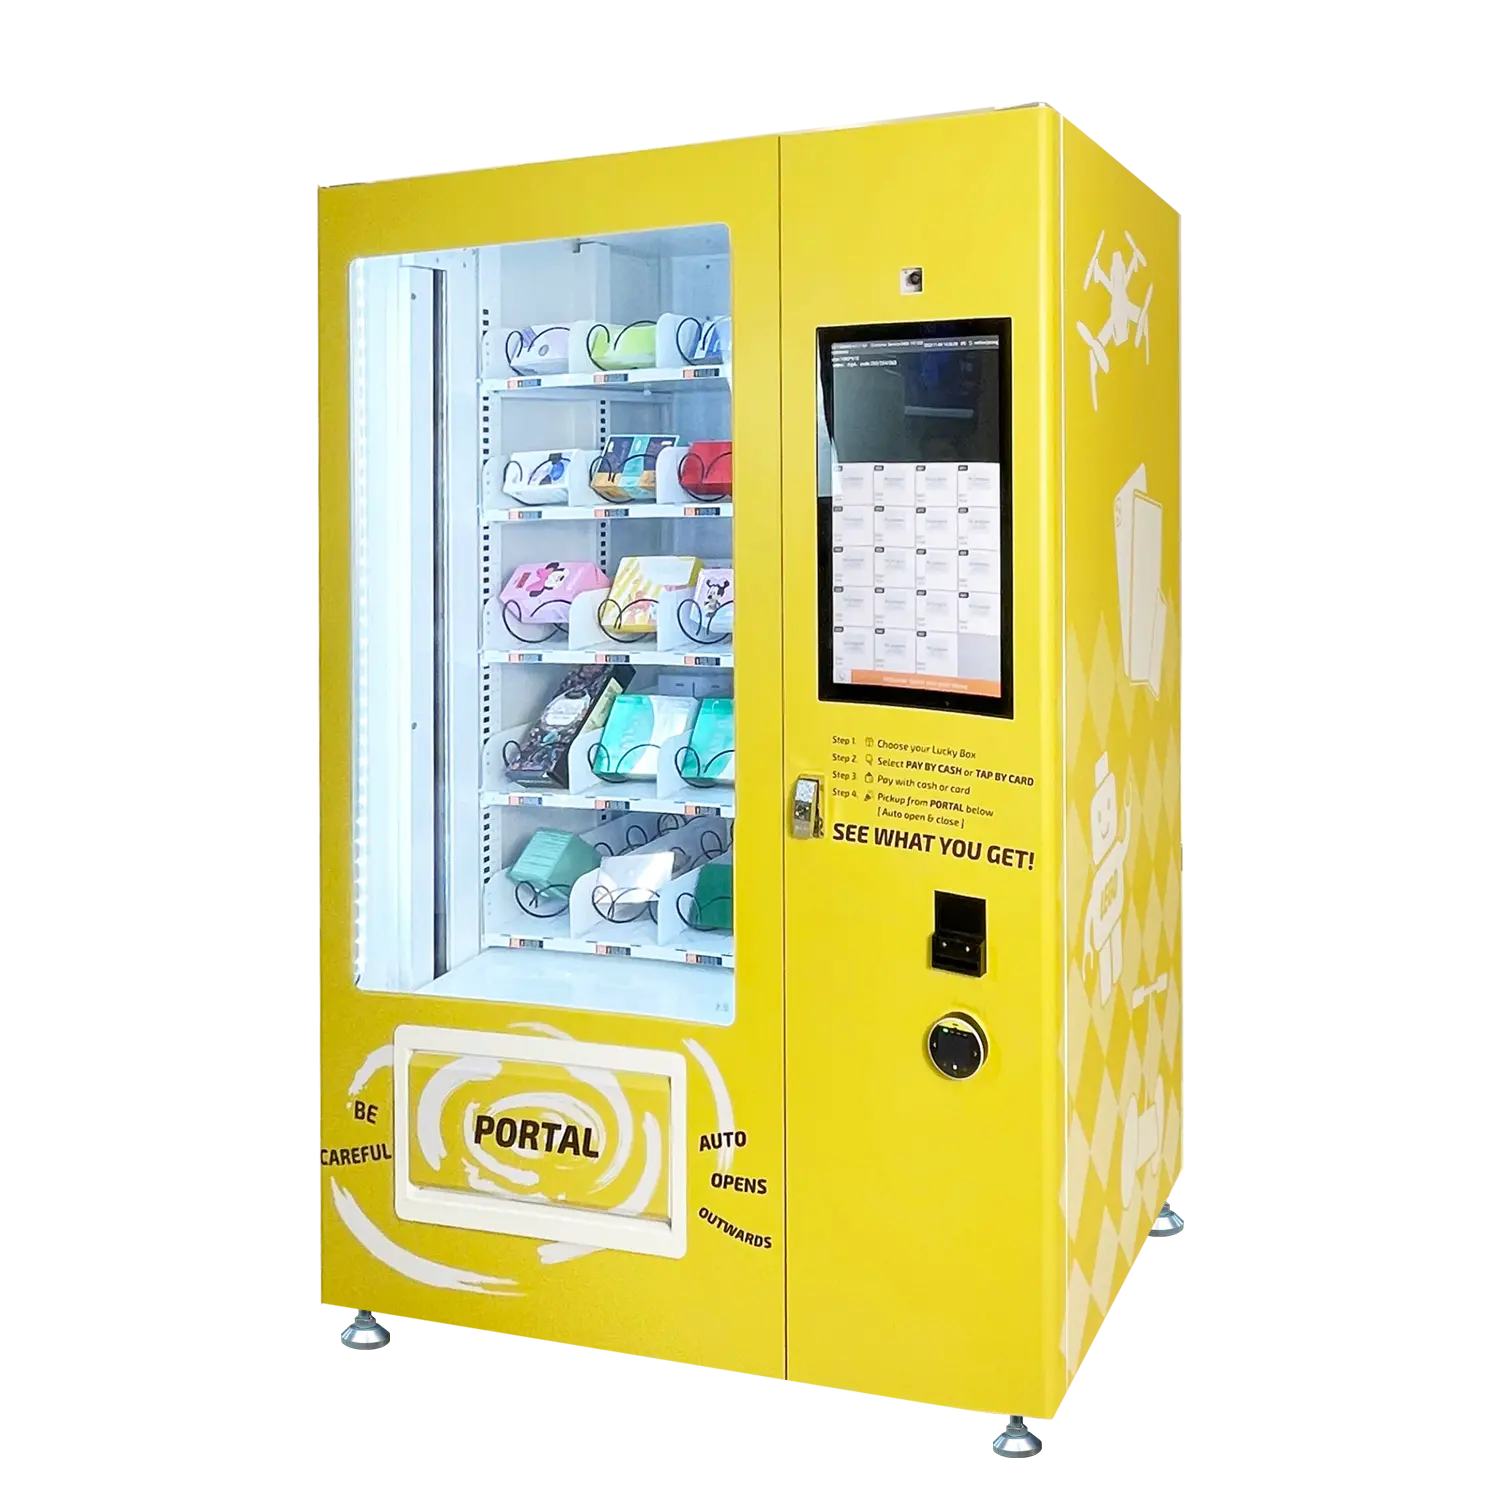 Lucky box vending machine